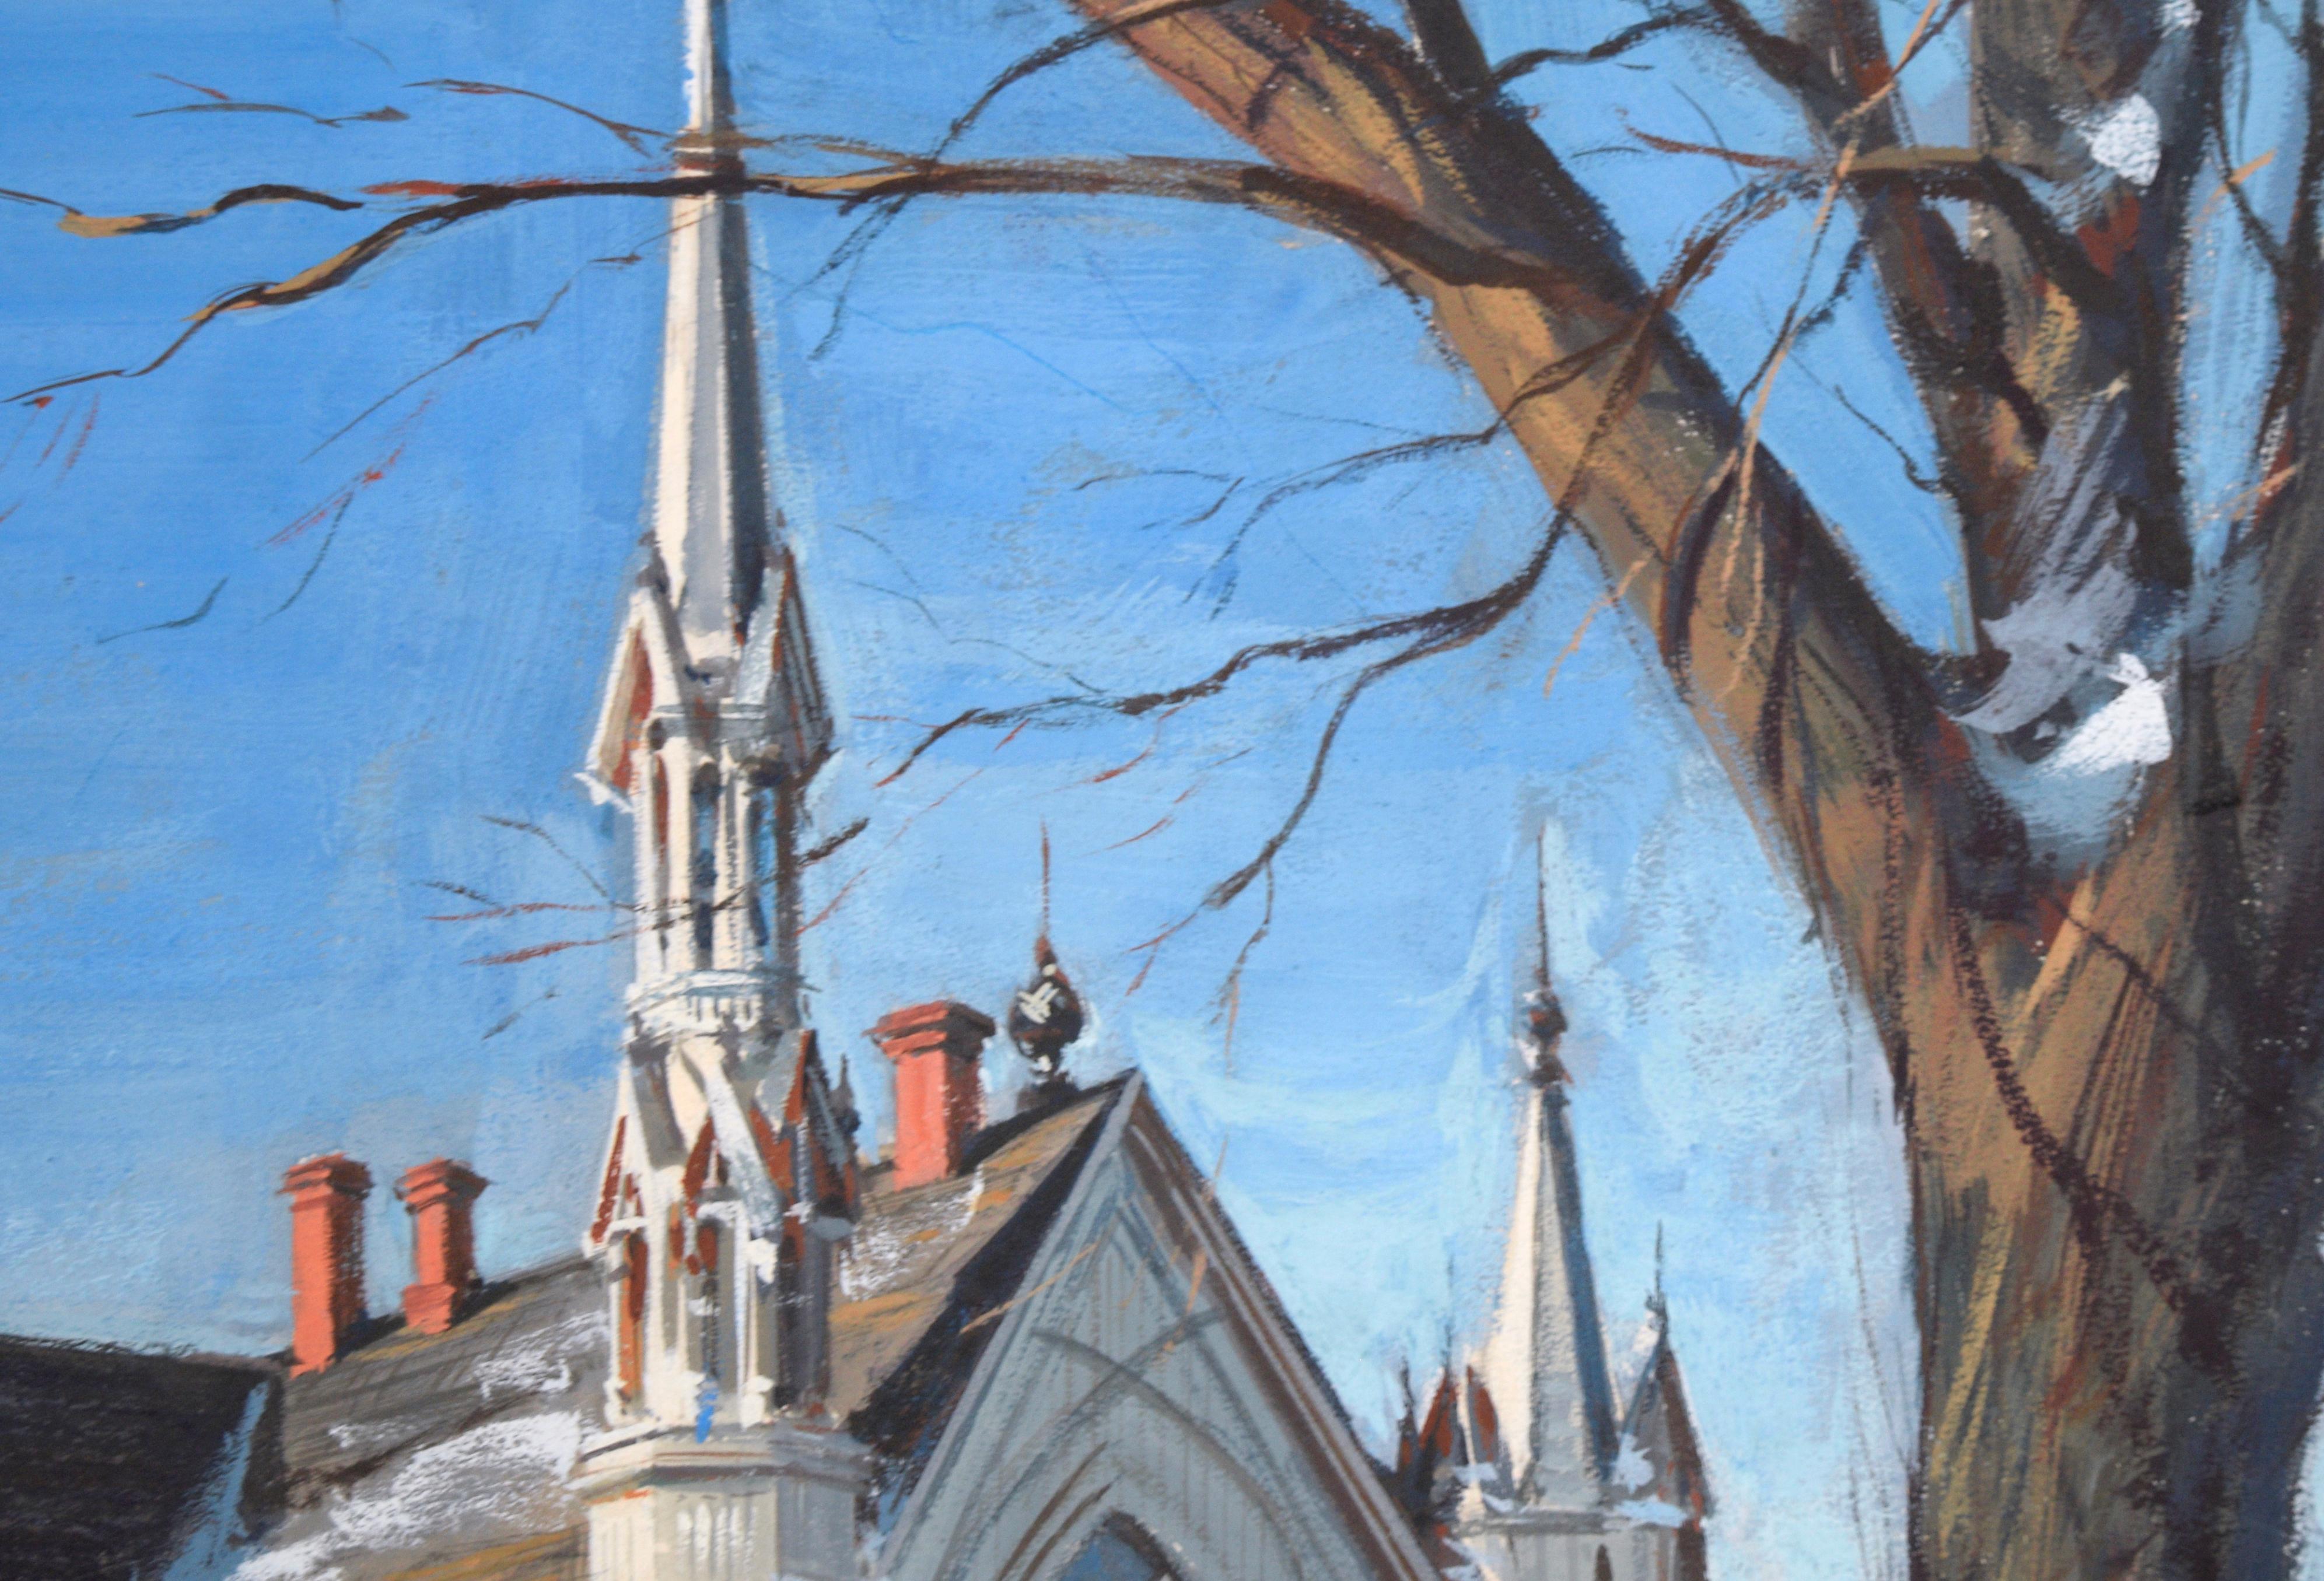 Arriving at Church in Winter – figurative, realistische Illustration (Amerikanischer Impressionismus), Painting, von Charles Kinghan